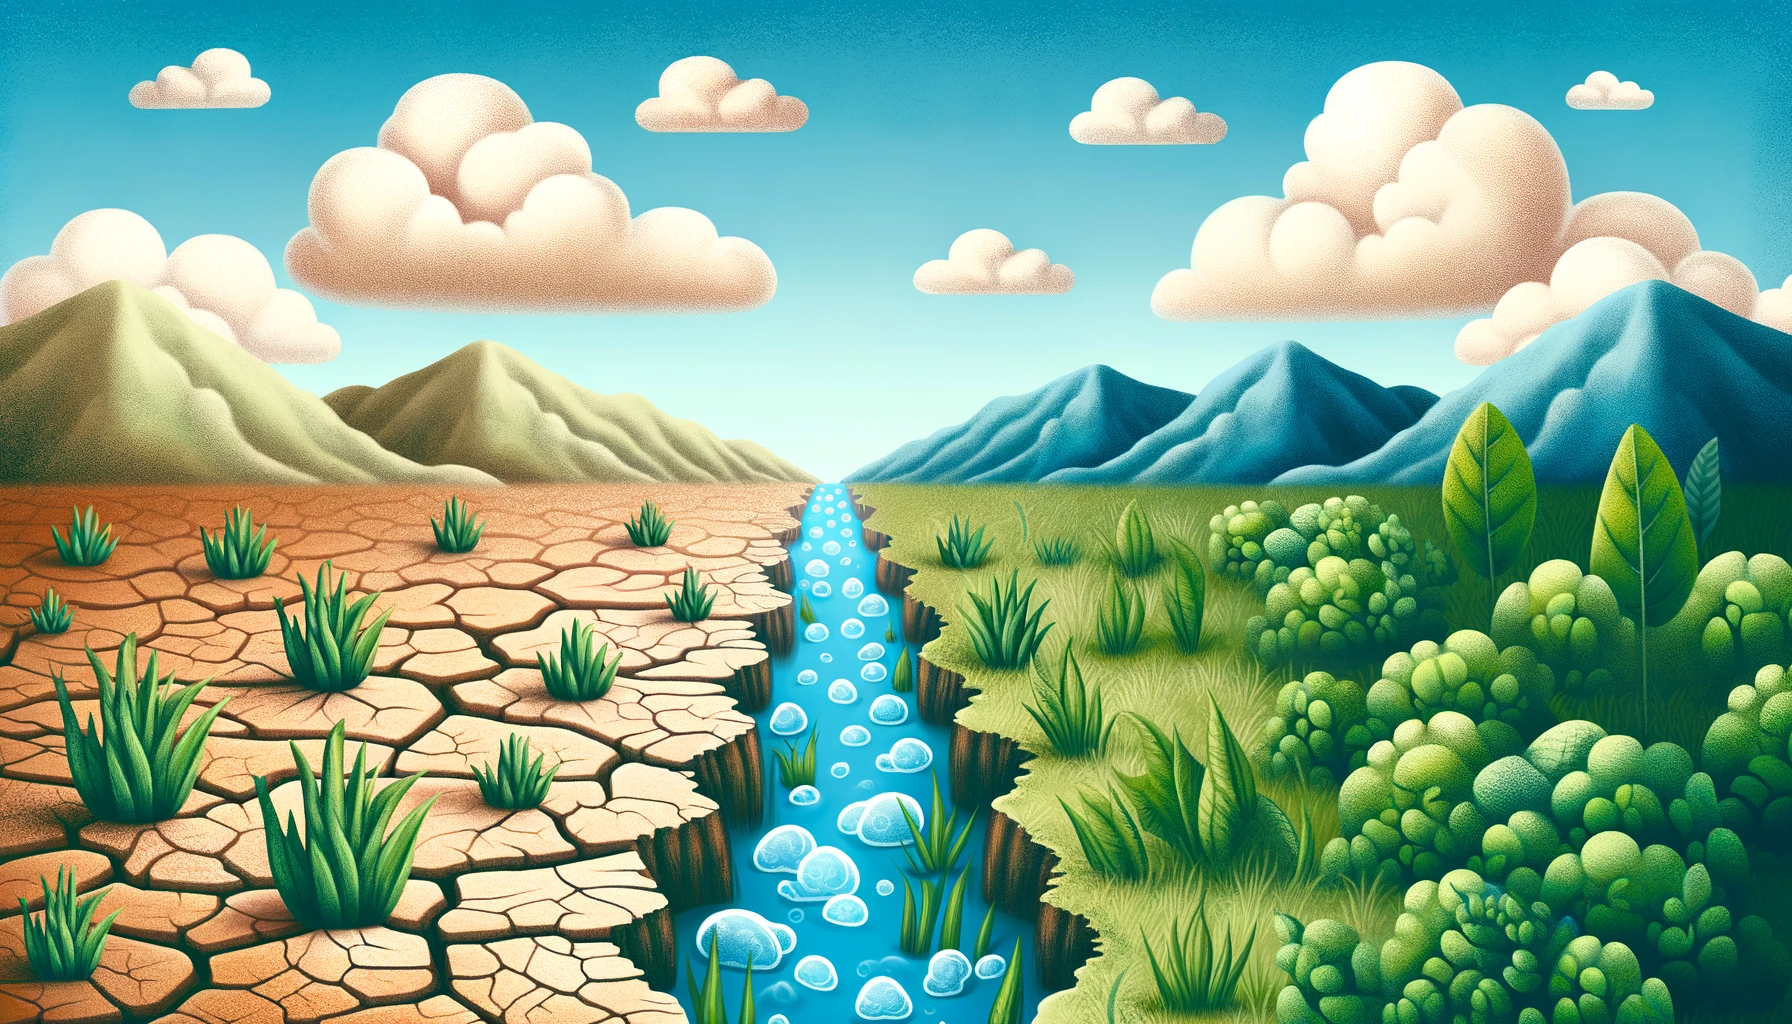 Dry cracked landscape transitioning to lush moist environment symbolizing hydration